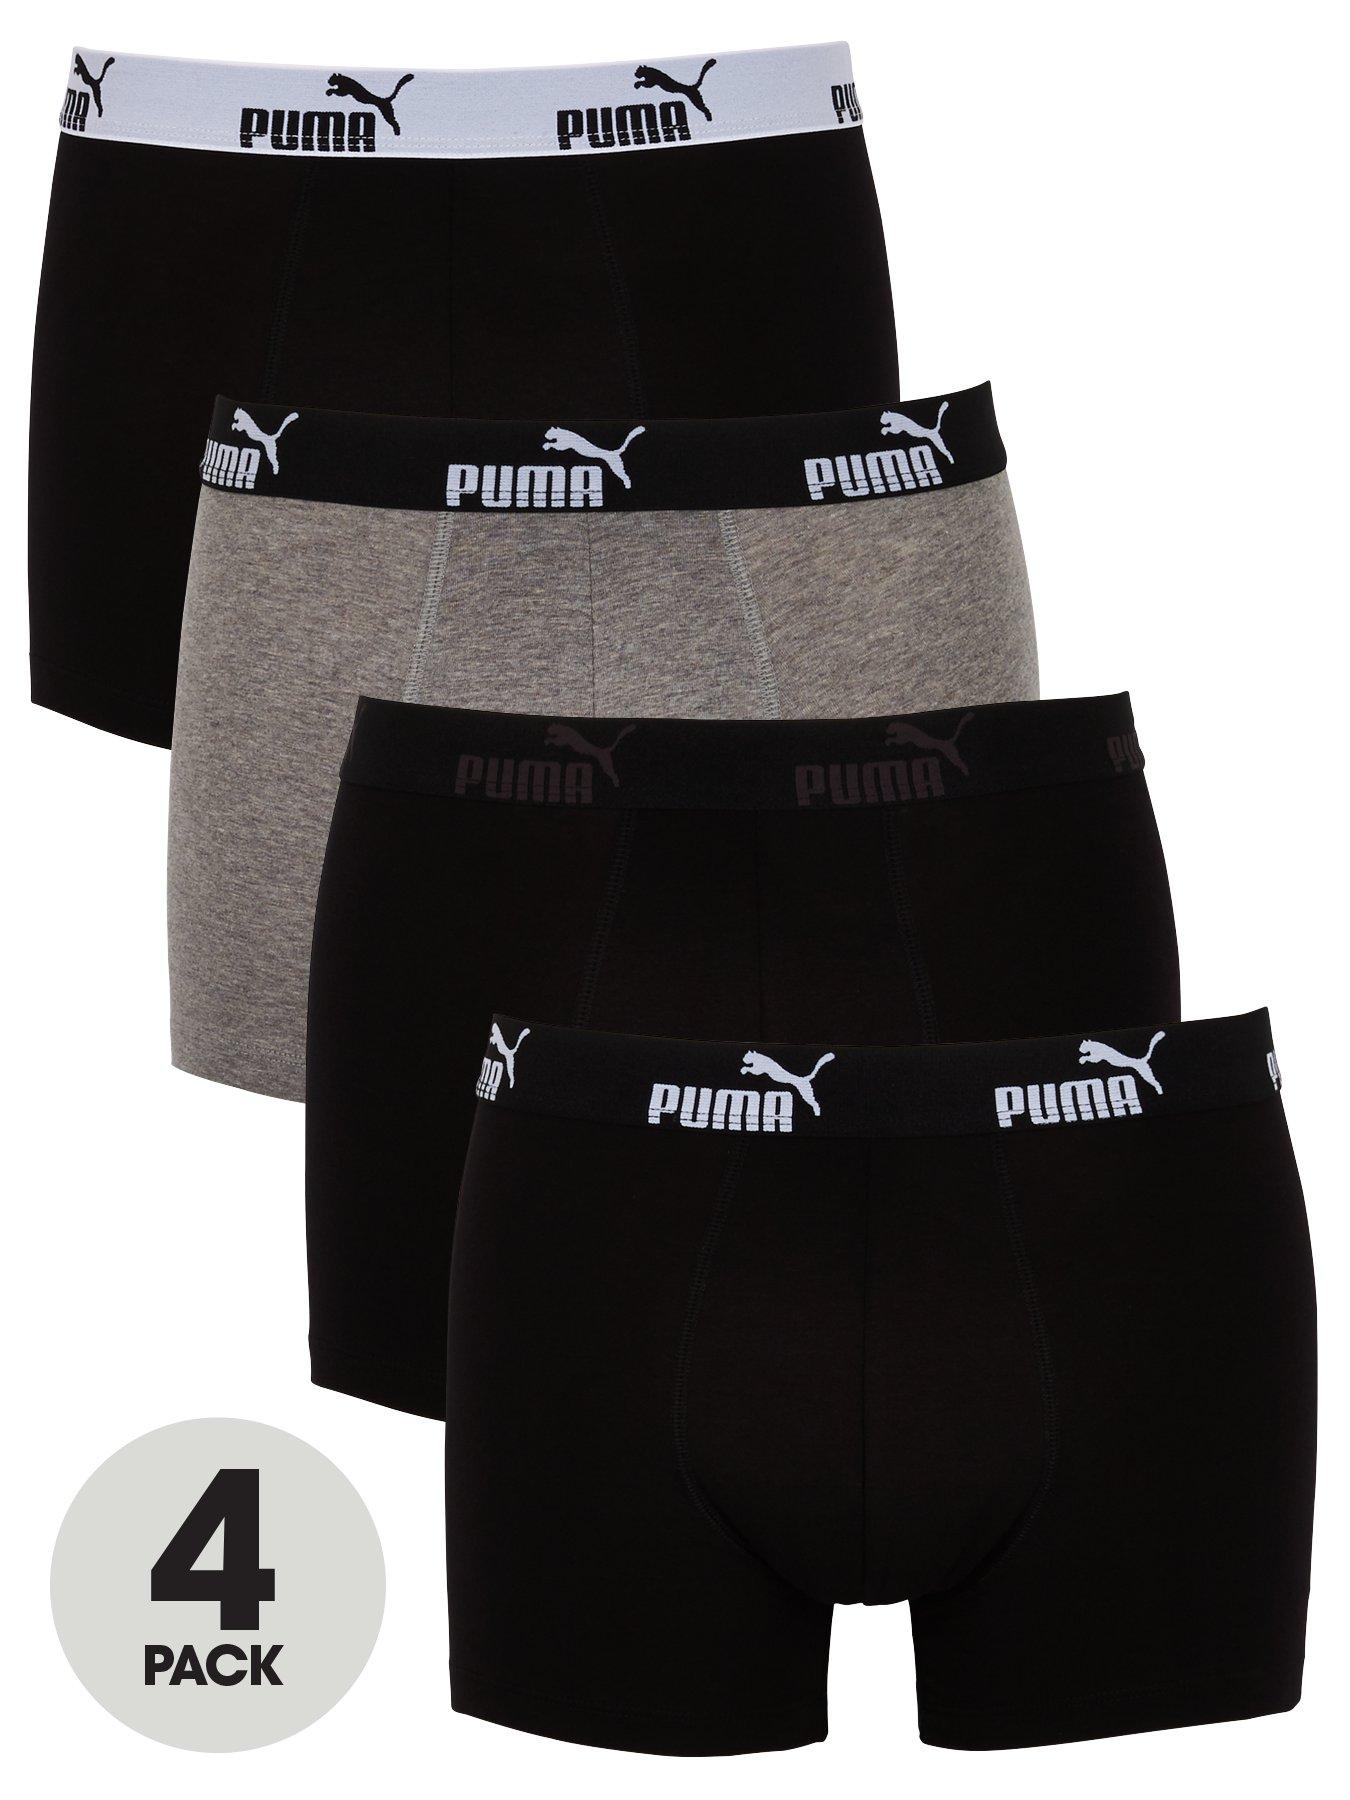 puma boxershorts 4 pack